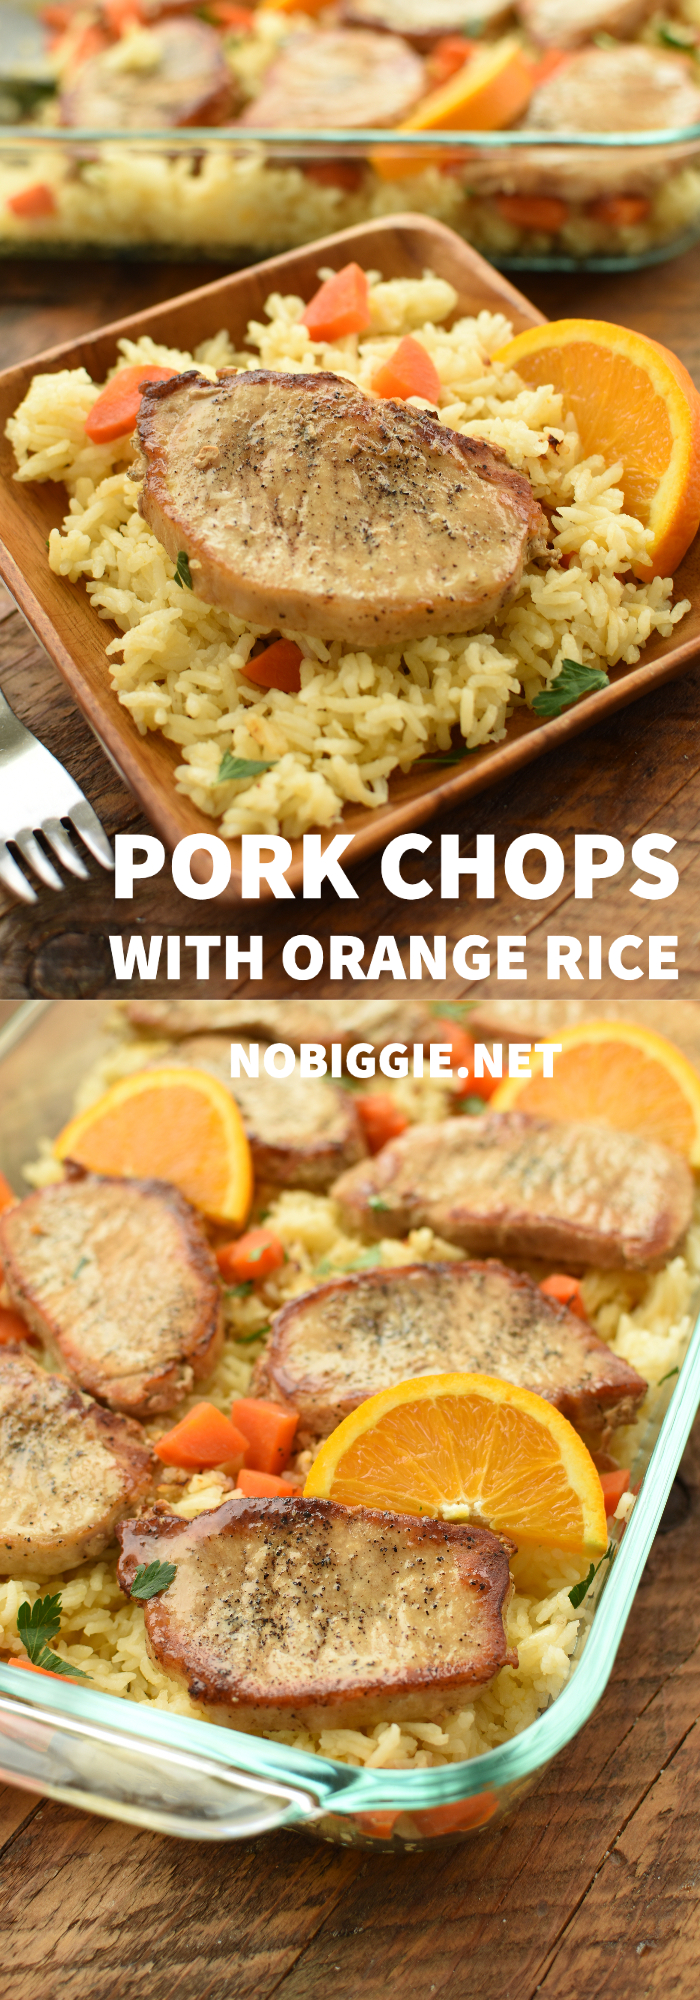 Pork Chops with Orange Rice